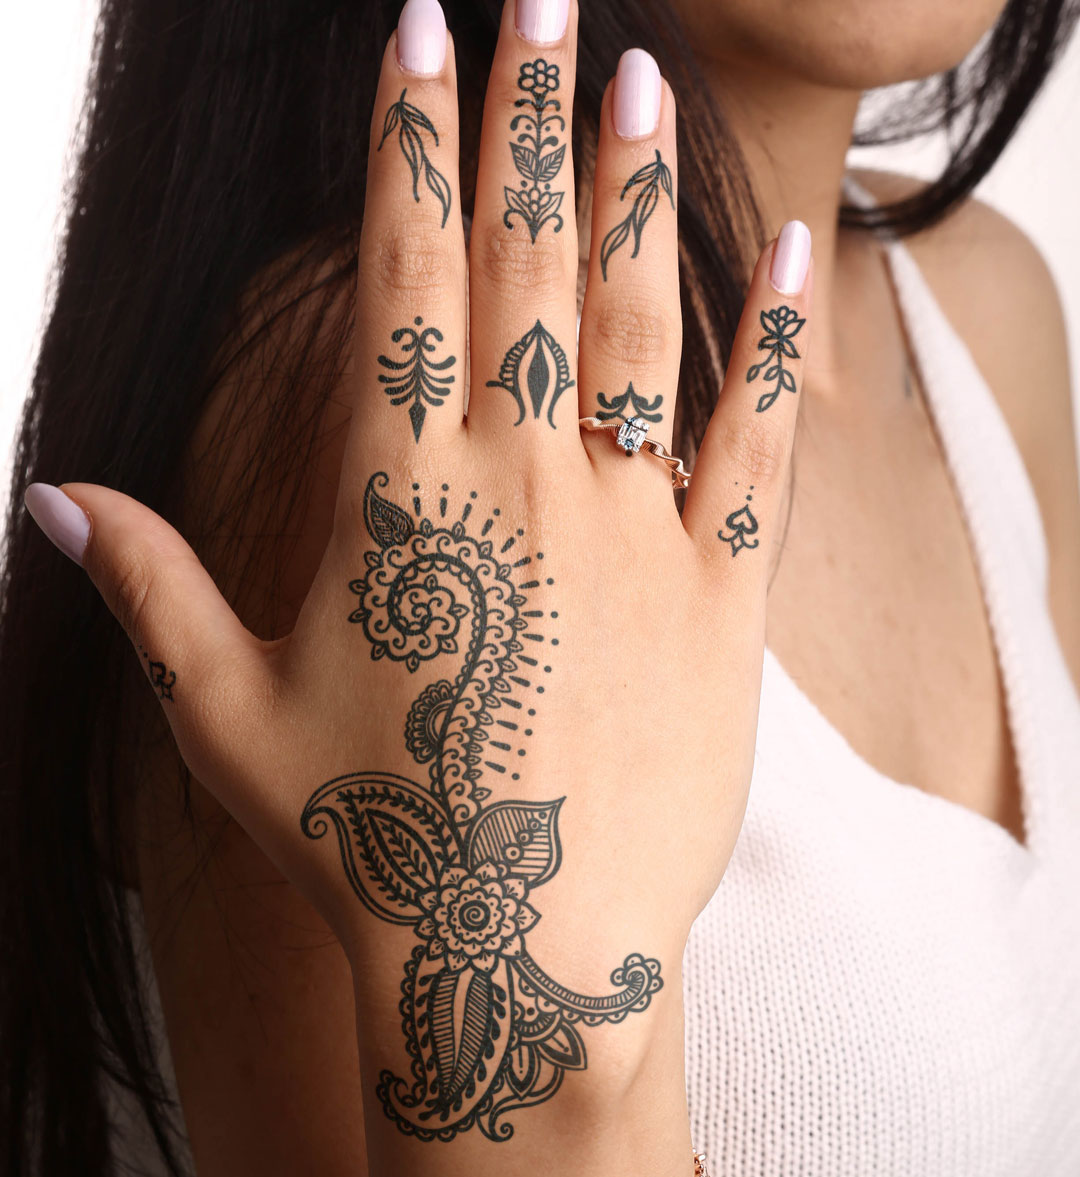 35 Incredible Henna Tattoo Design Inspirations ...